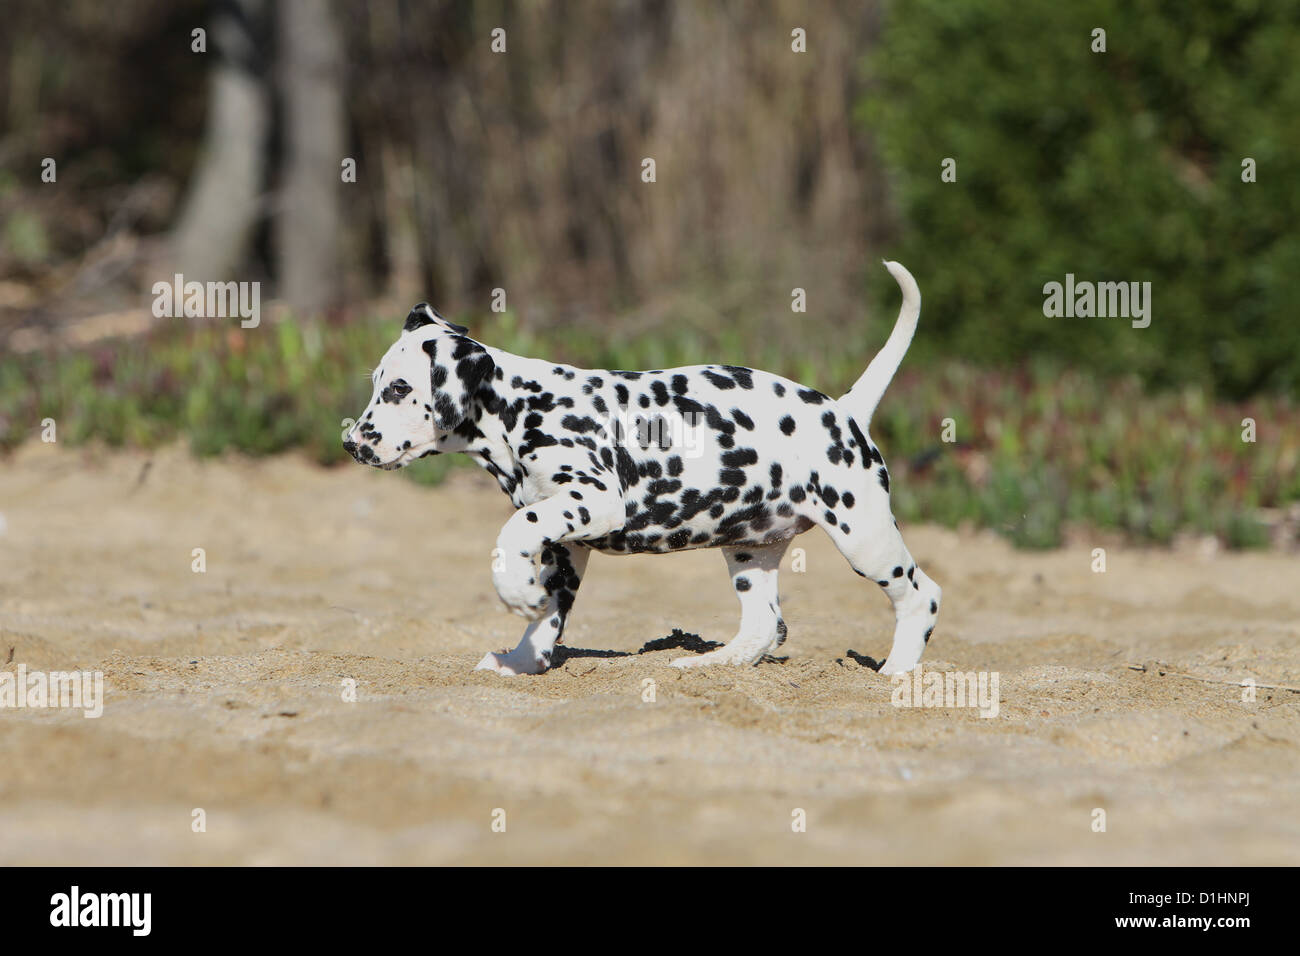 Dog Dalmatian / Dalmatiner / Dalmatien puppy walking on the sand Stock Photo